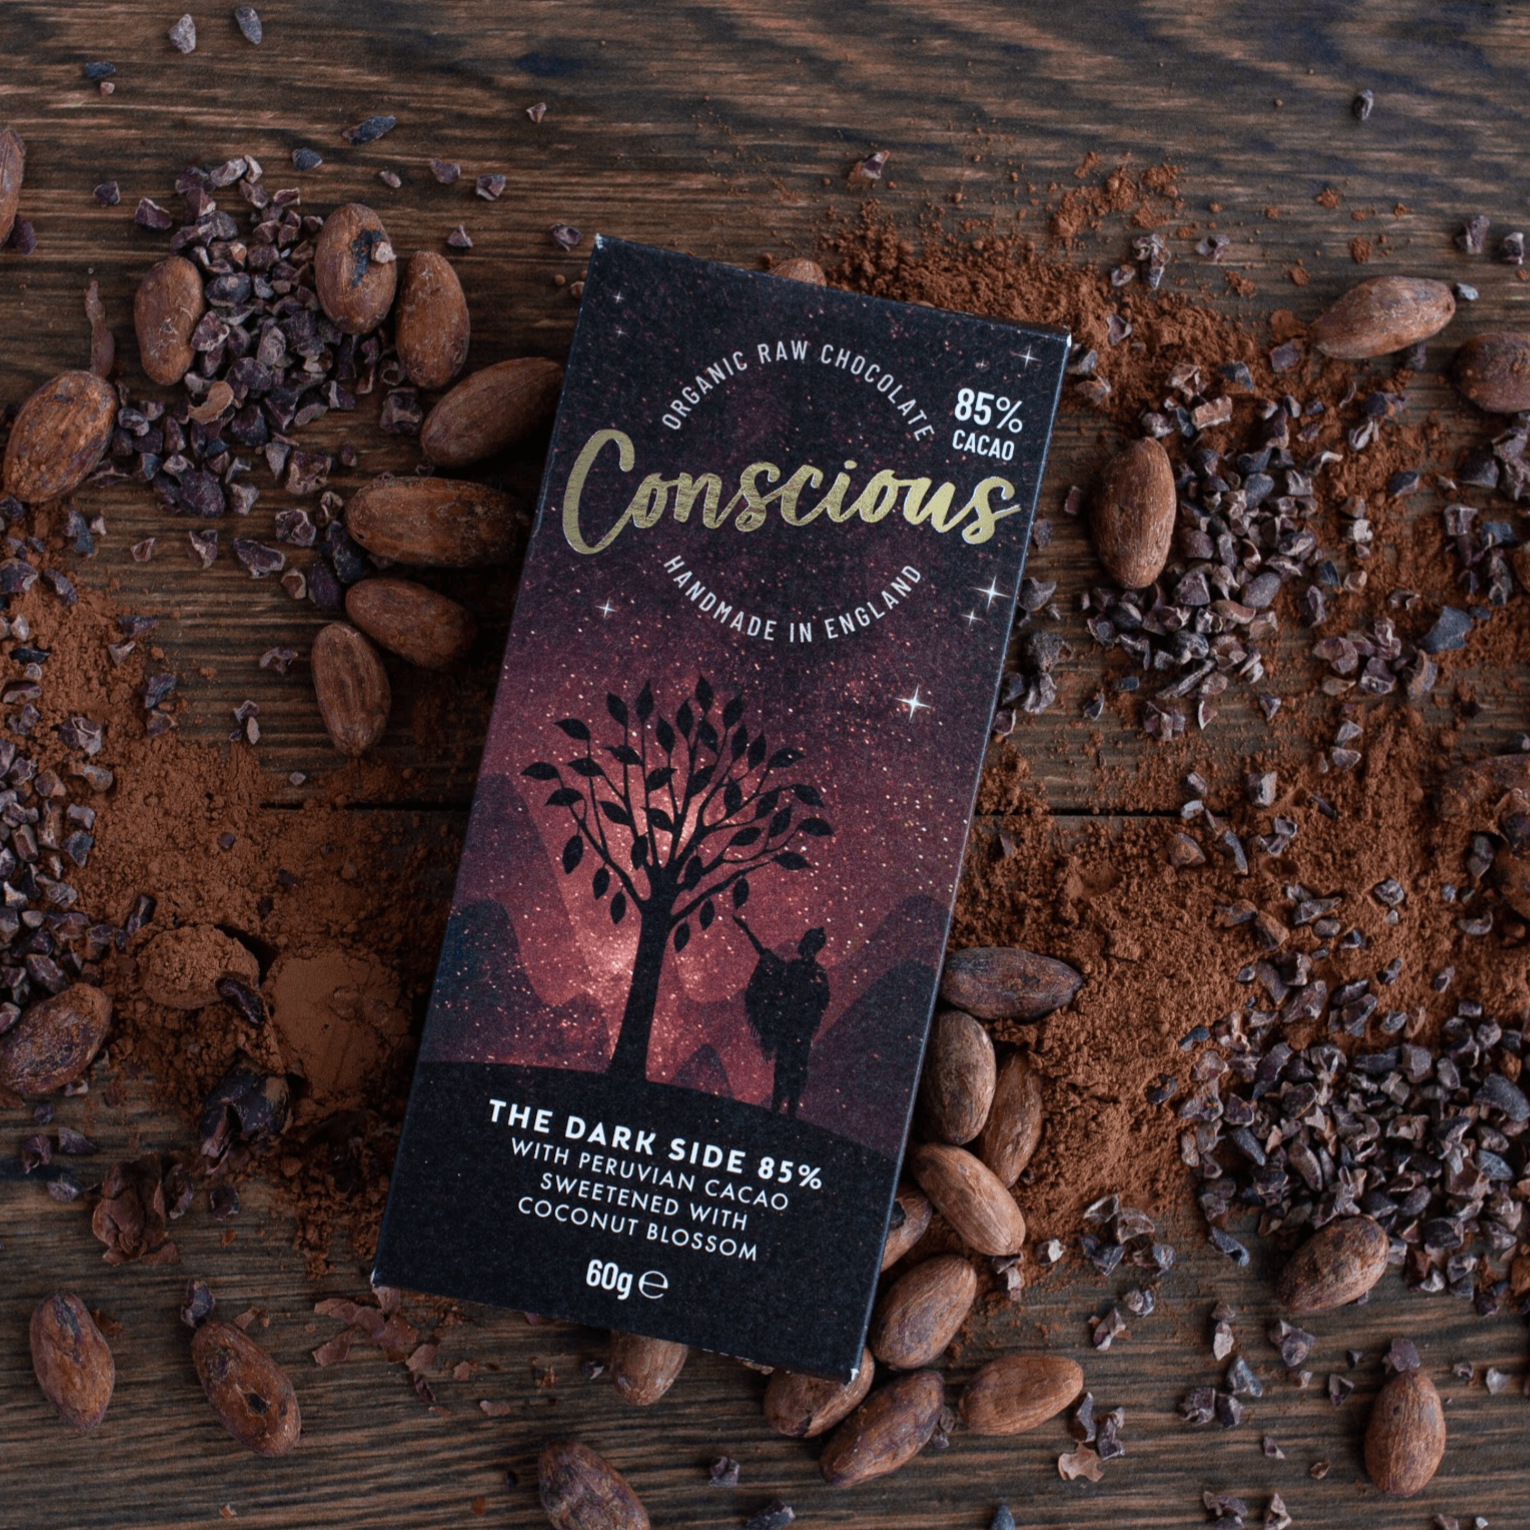 The Dark Side 85% 60g - Conscious Chocolate